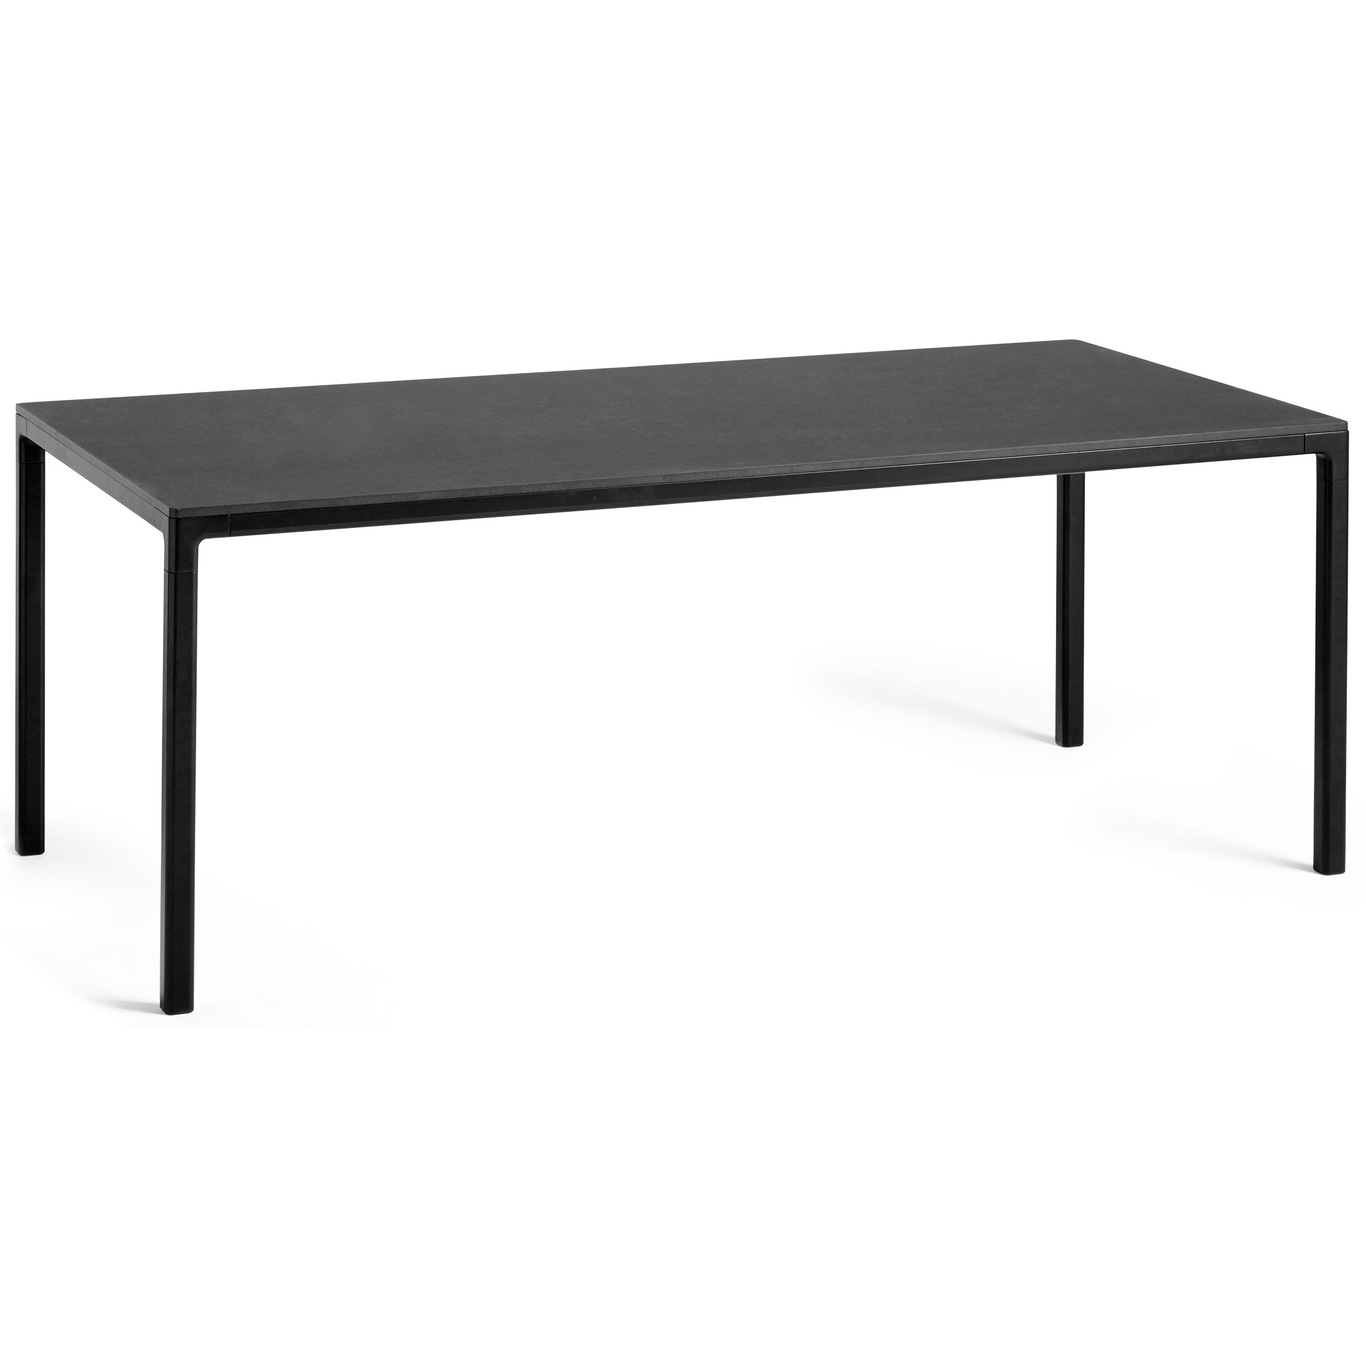 T12 Table 120x200 cm, Black